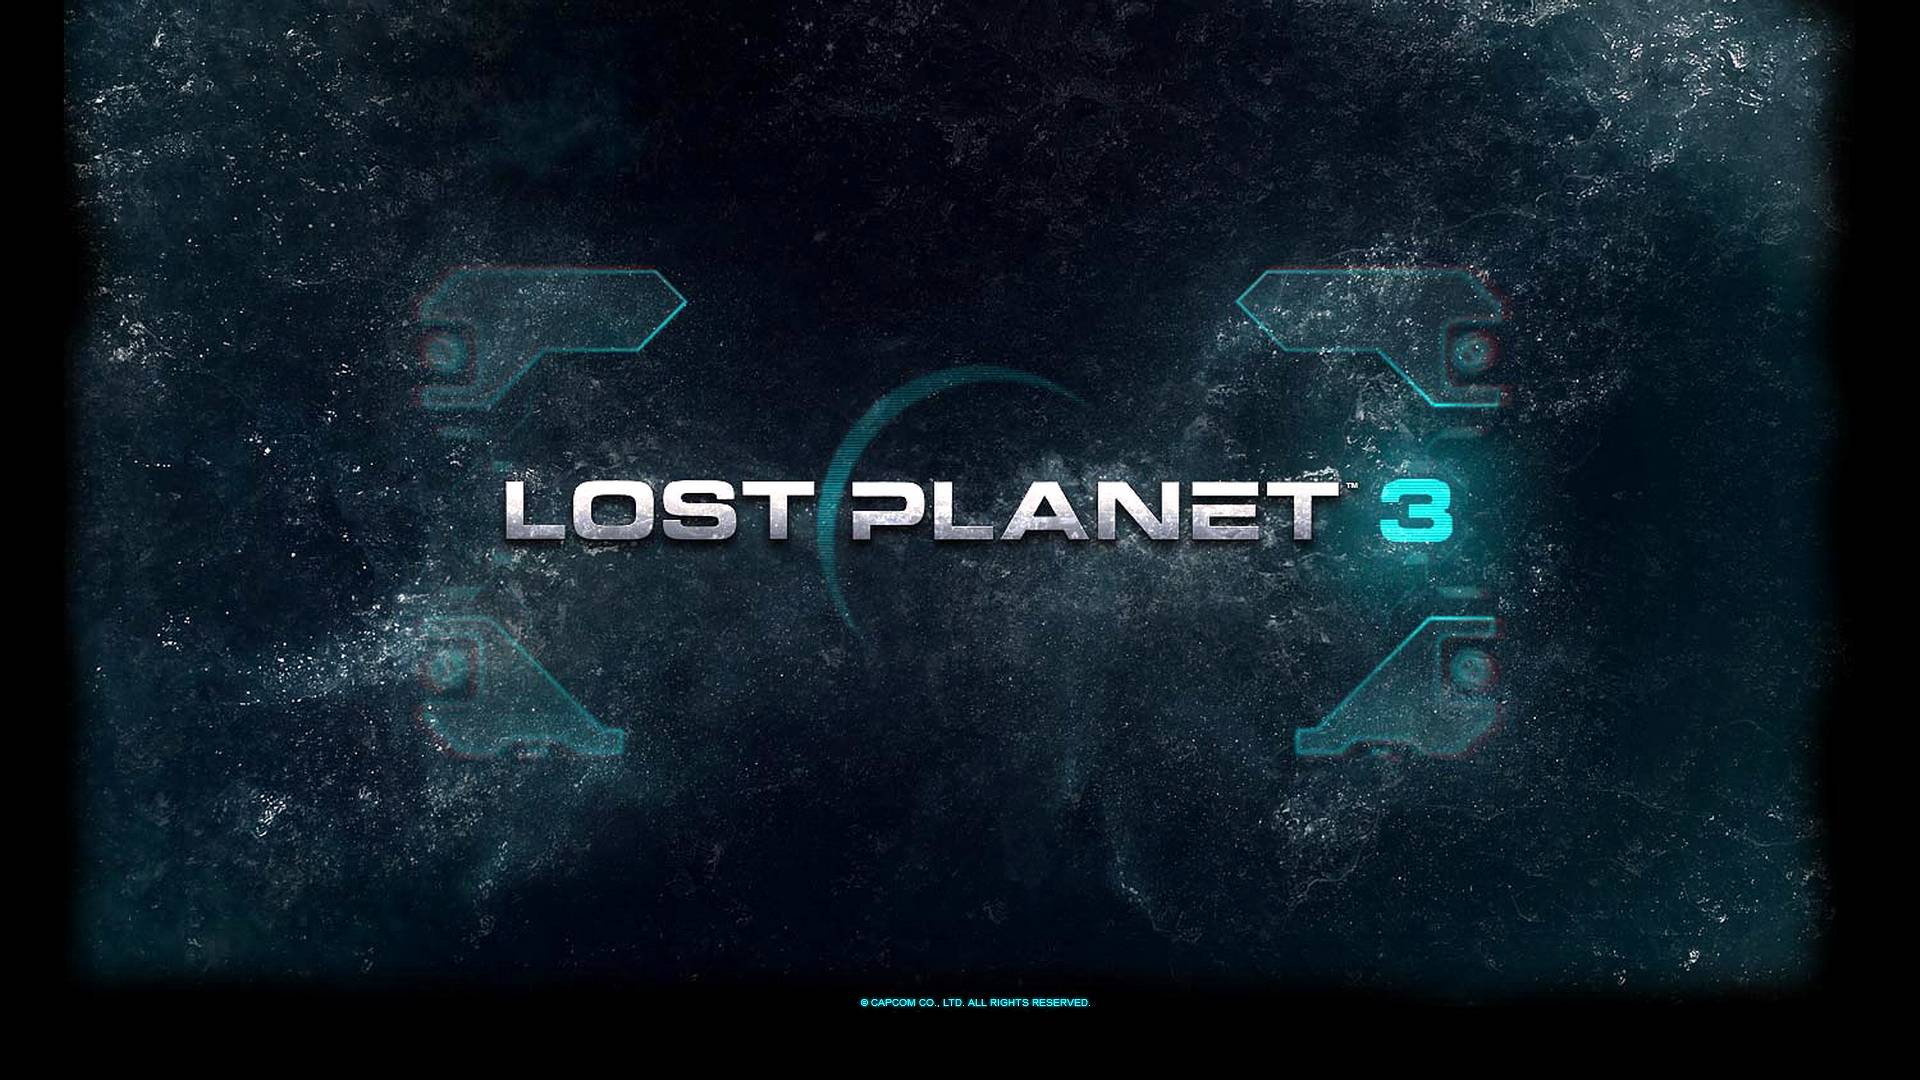 Lost Planet 3 Wallpaper in 1080P HD « GamingBolt.com: Video Game